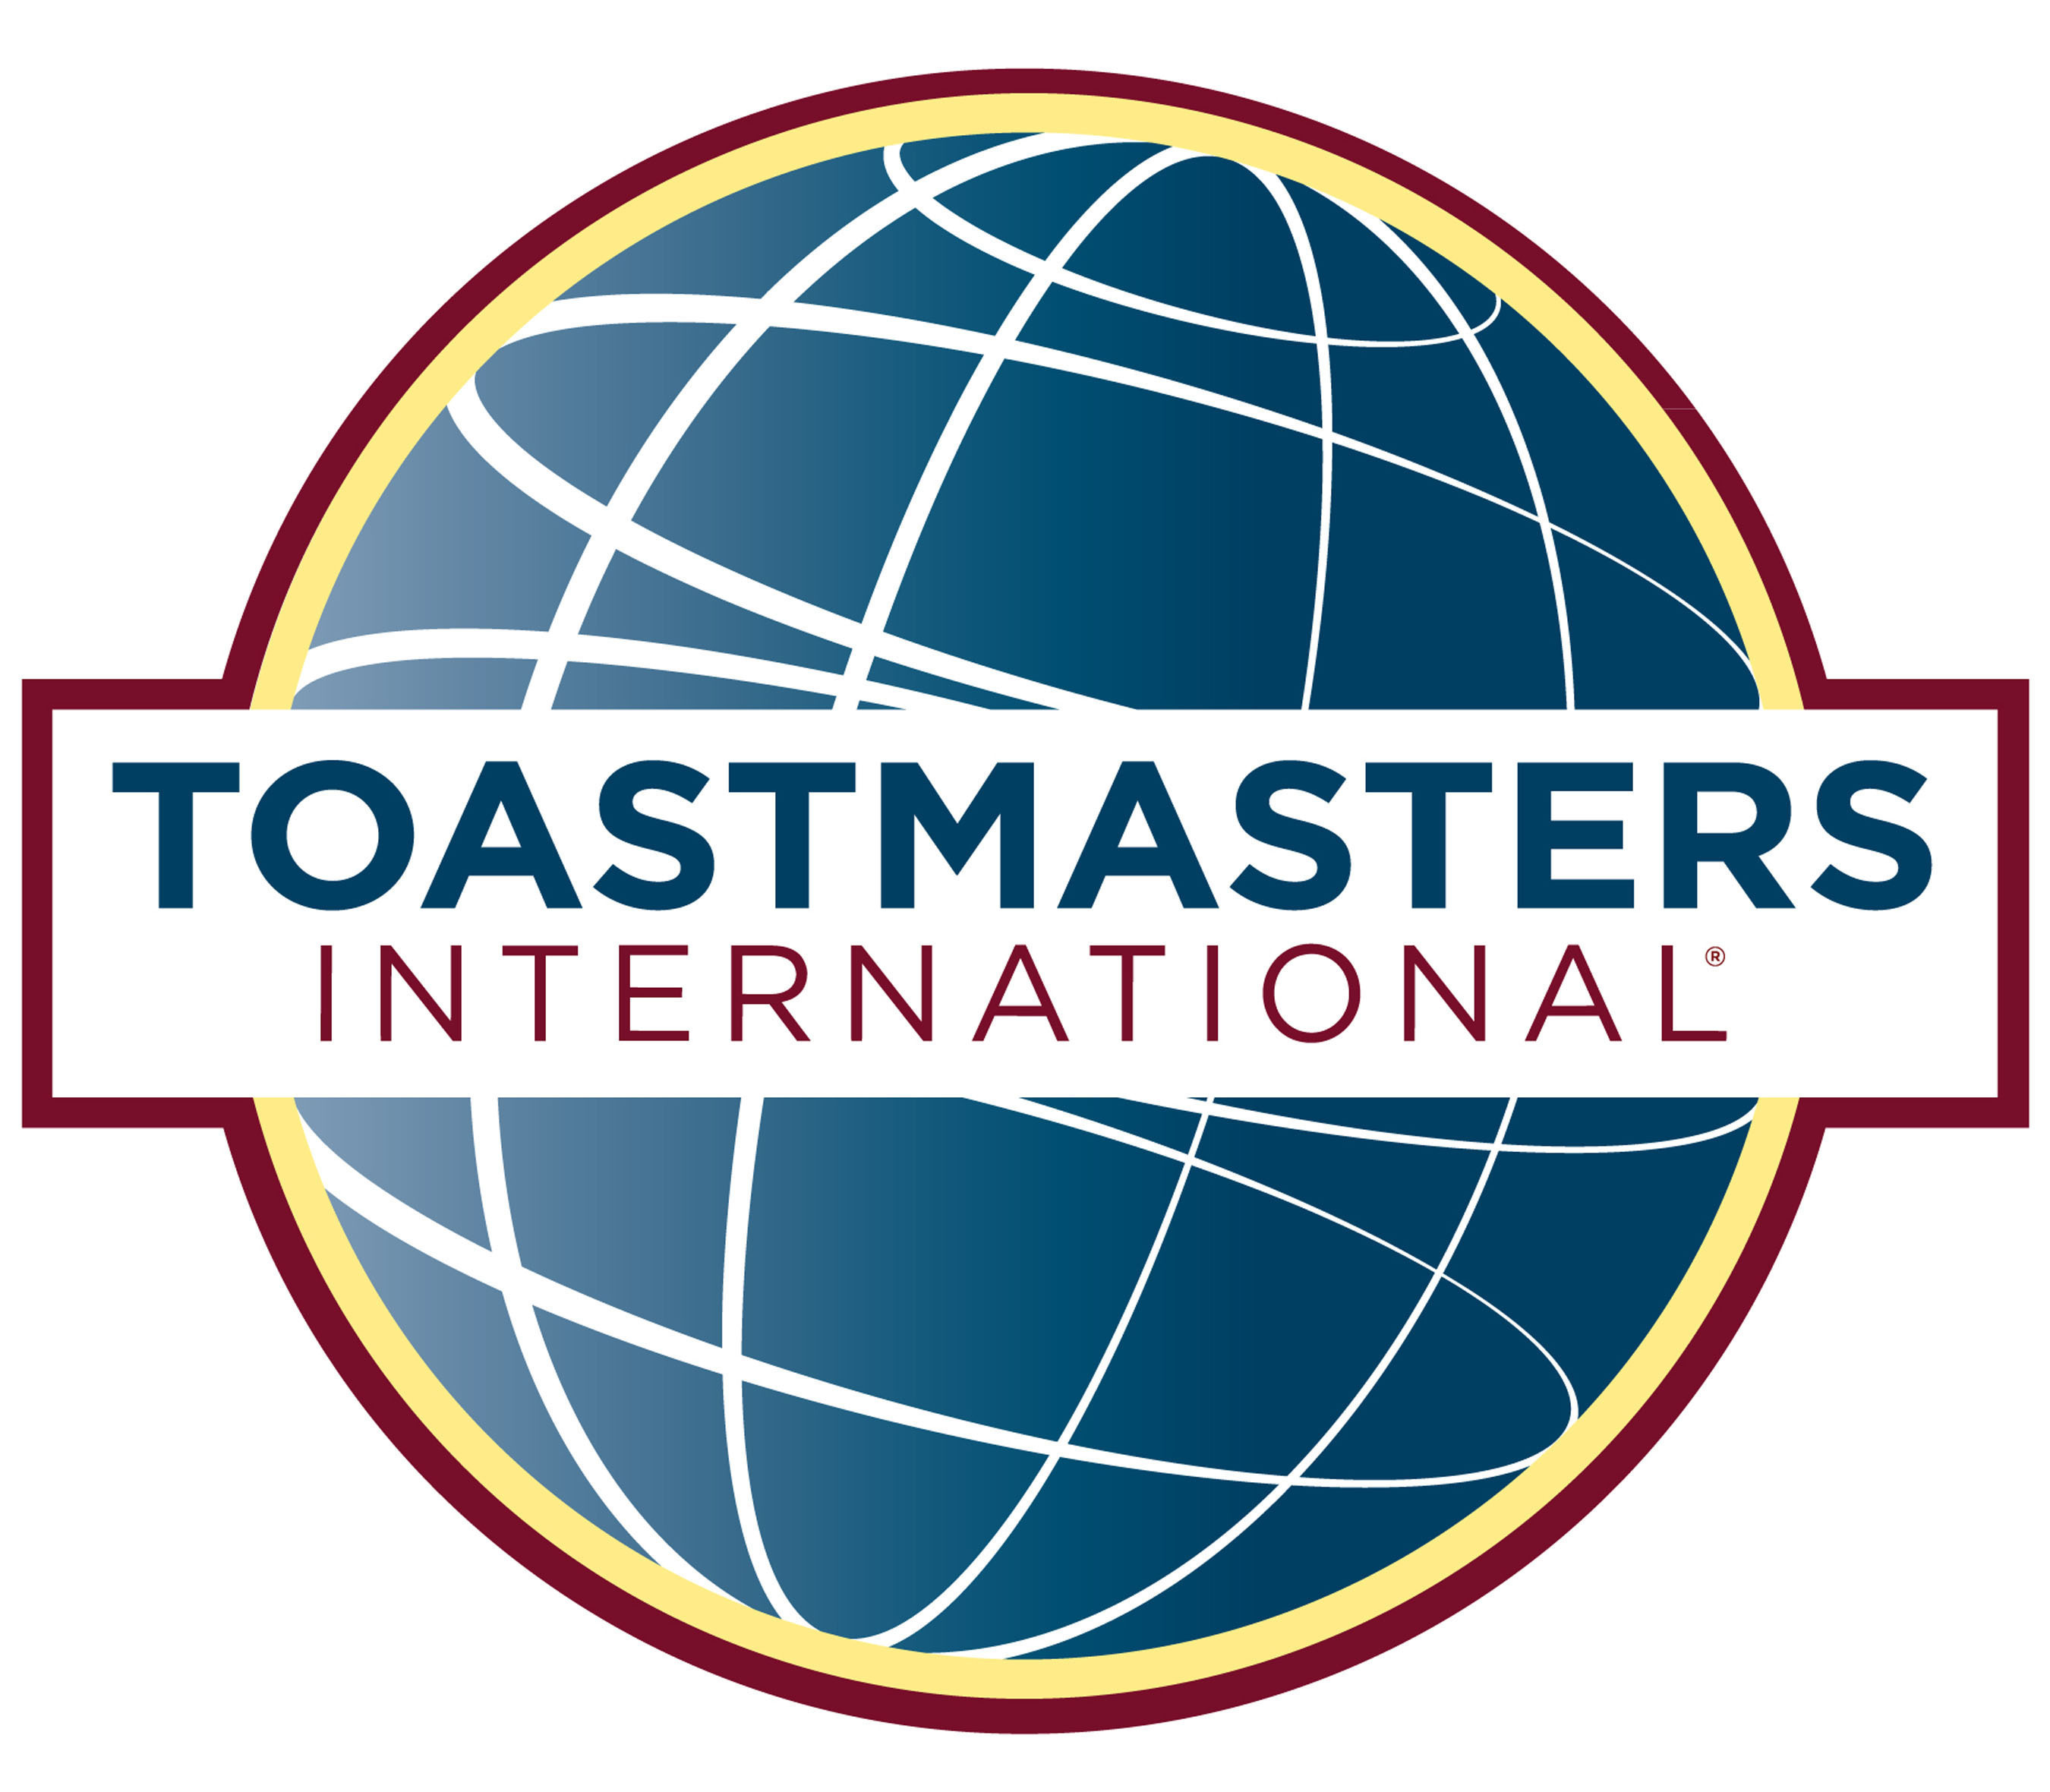 Toastmasters International LOGO.